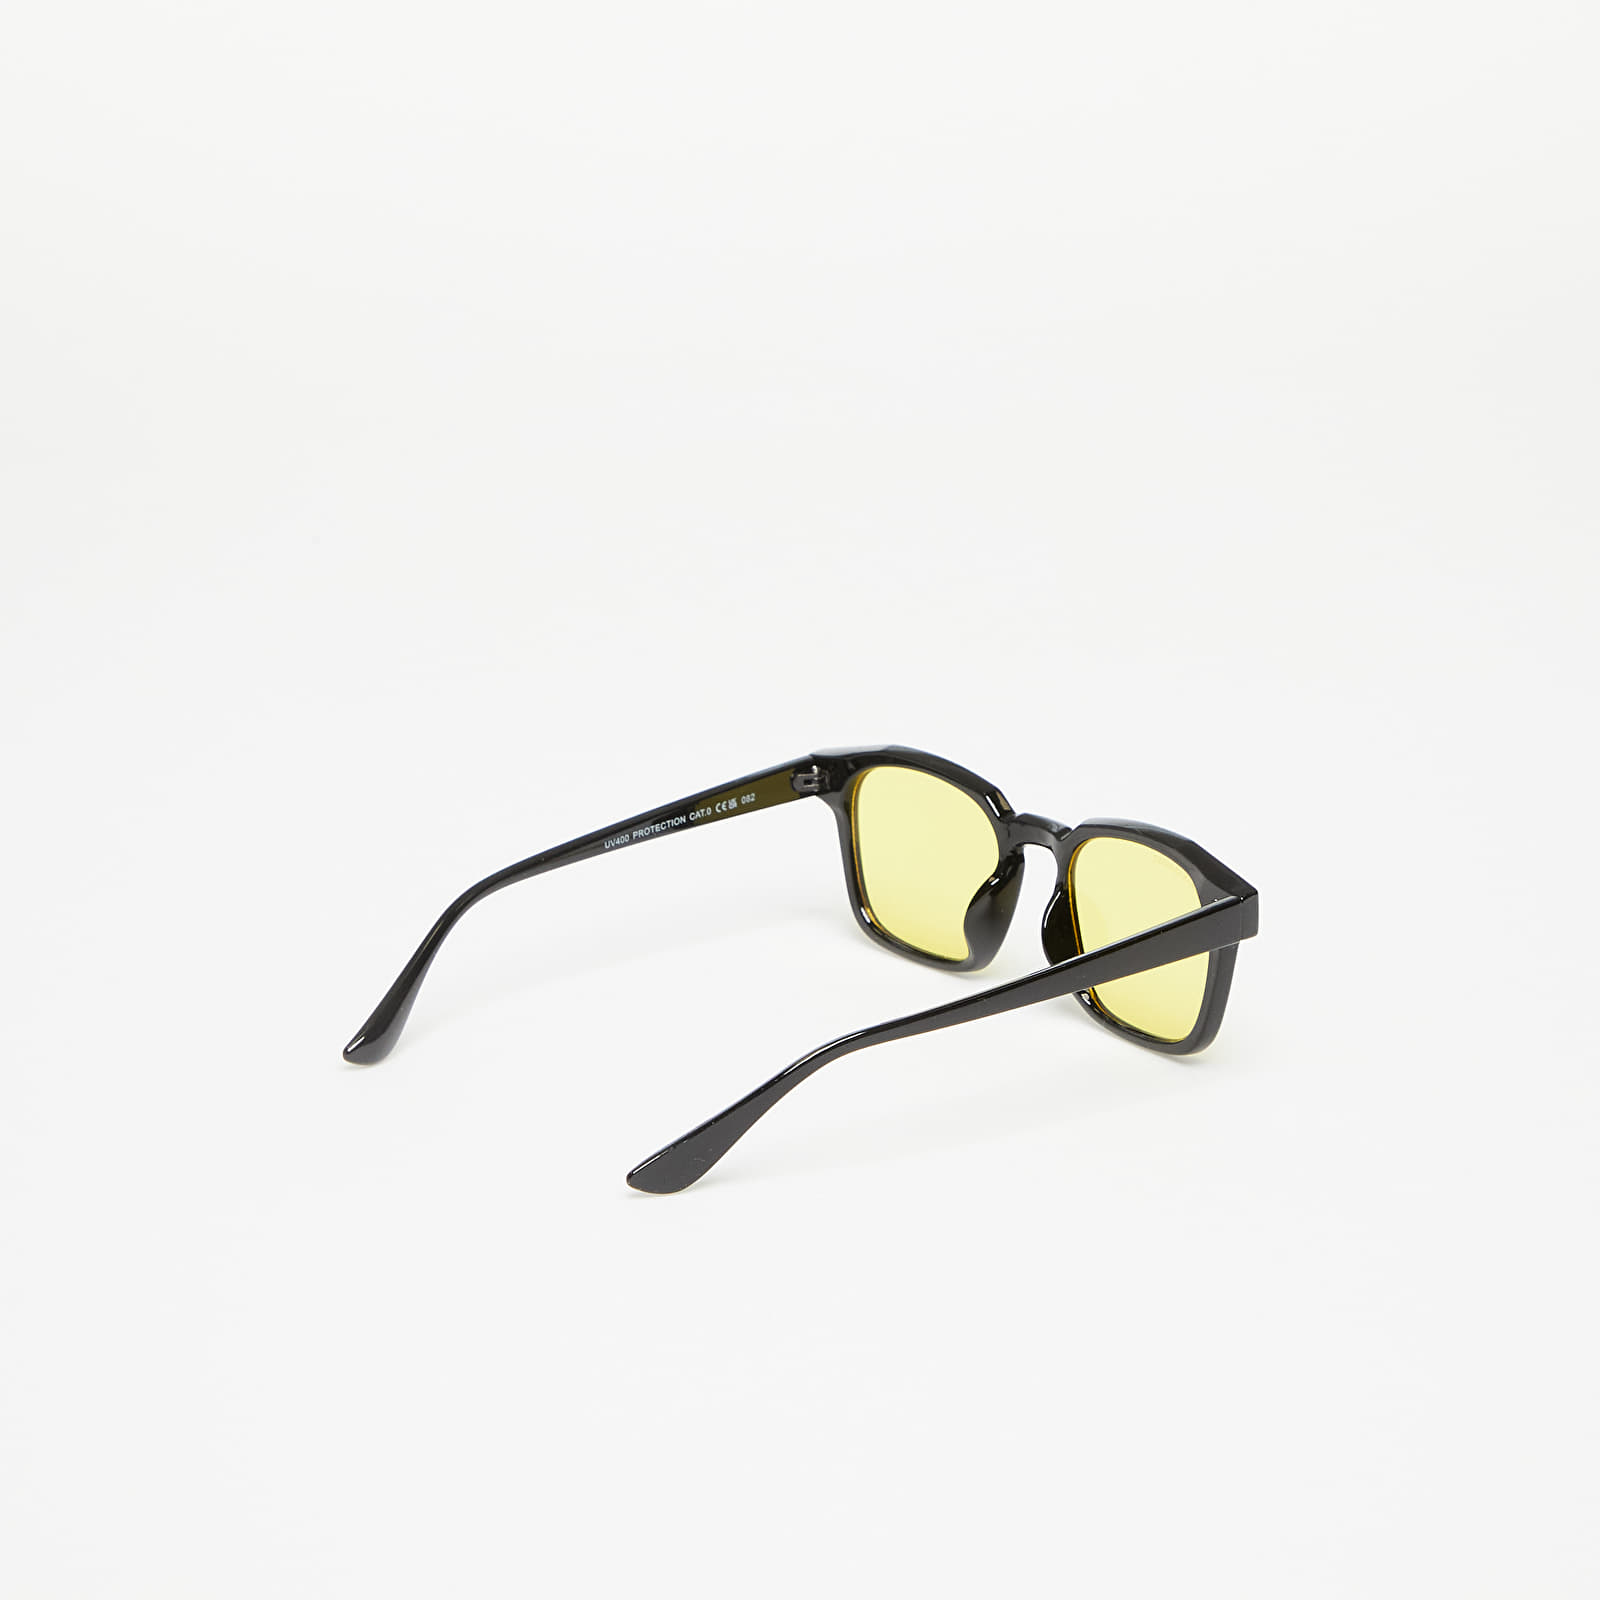 Maui Classics Sunglasses Case With Yellowlow Sunglasses Urban Queens Black/ |